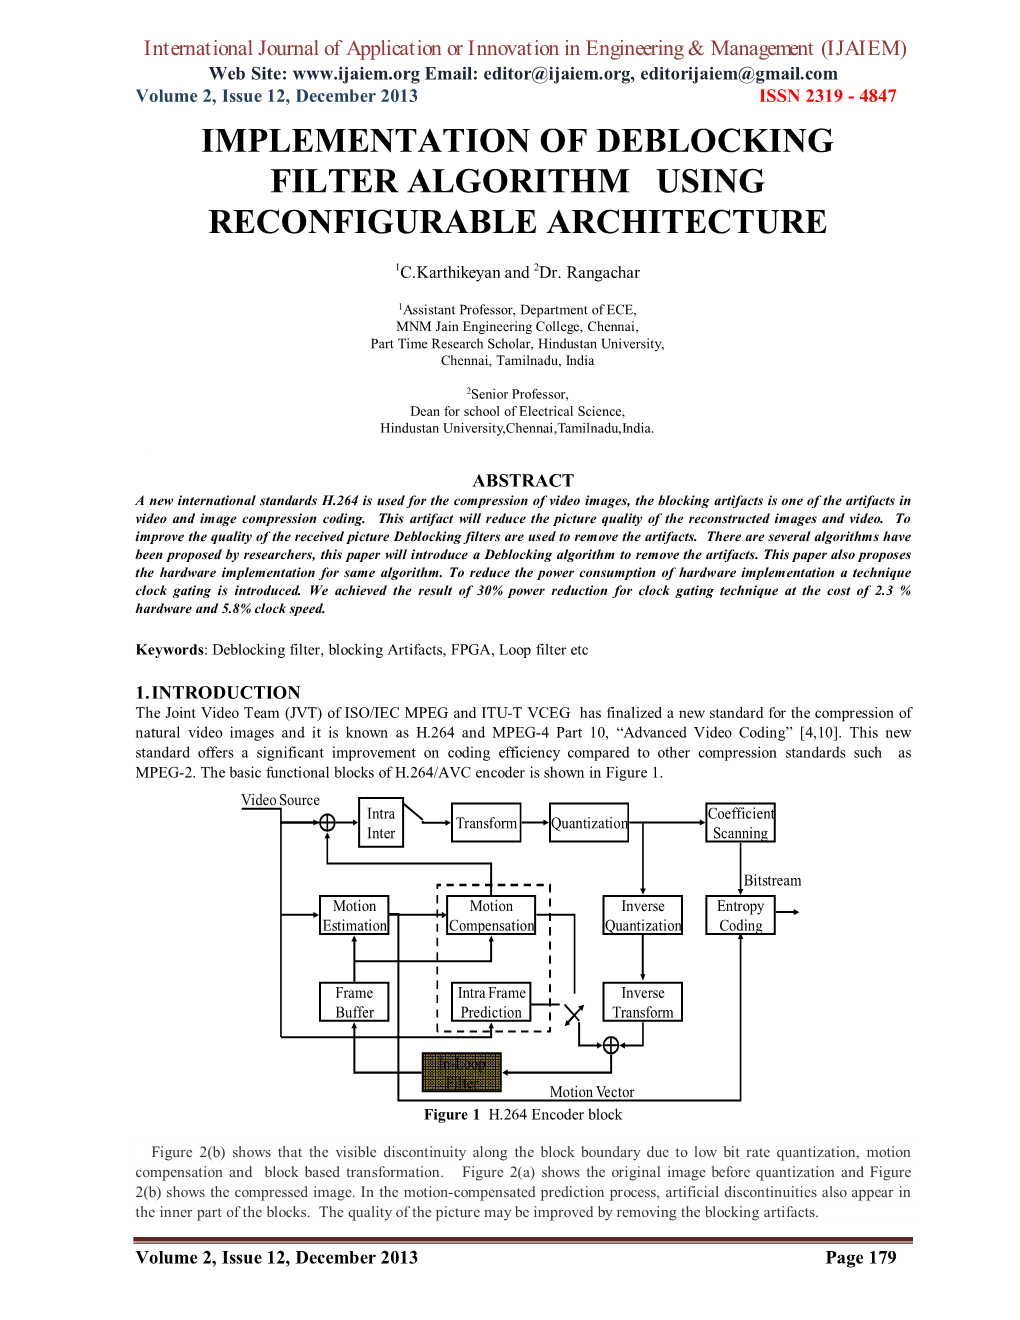 Implementation of Deblocking Filter Algorithm Using Reconfigurable Architecture